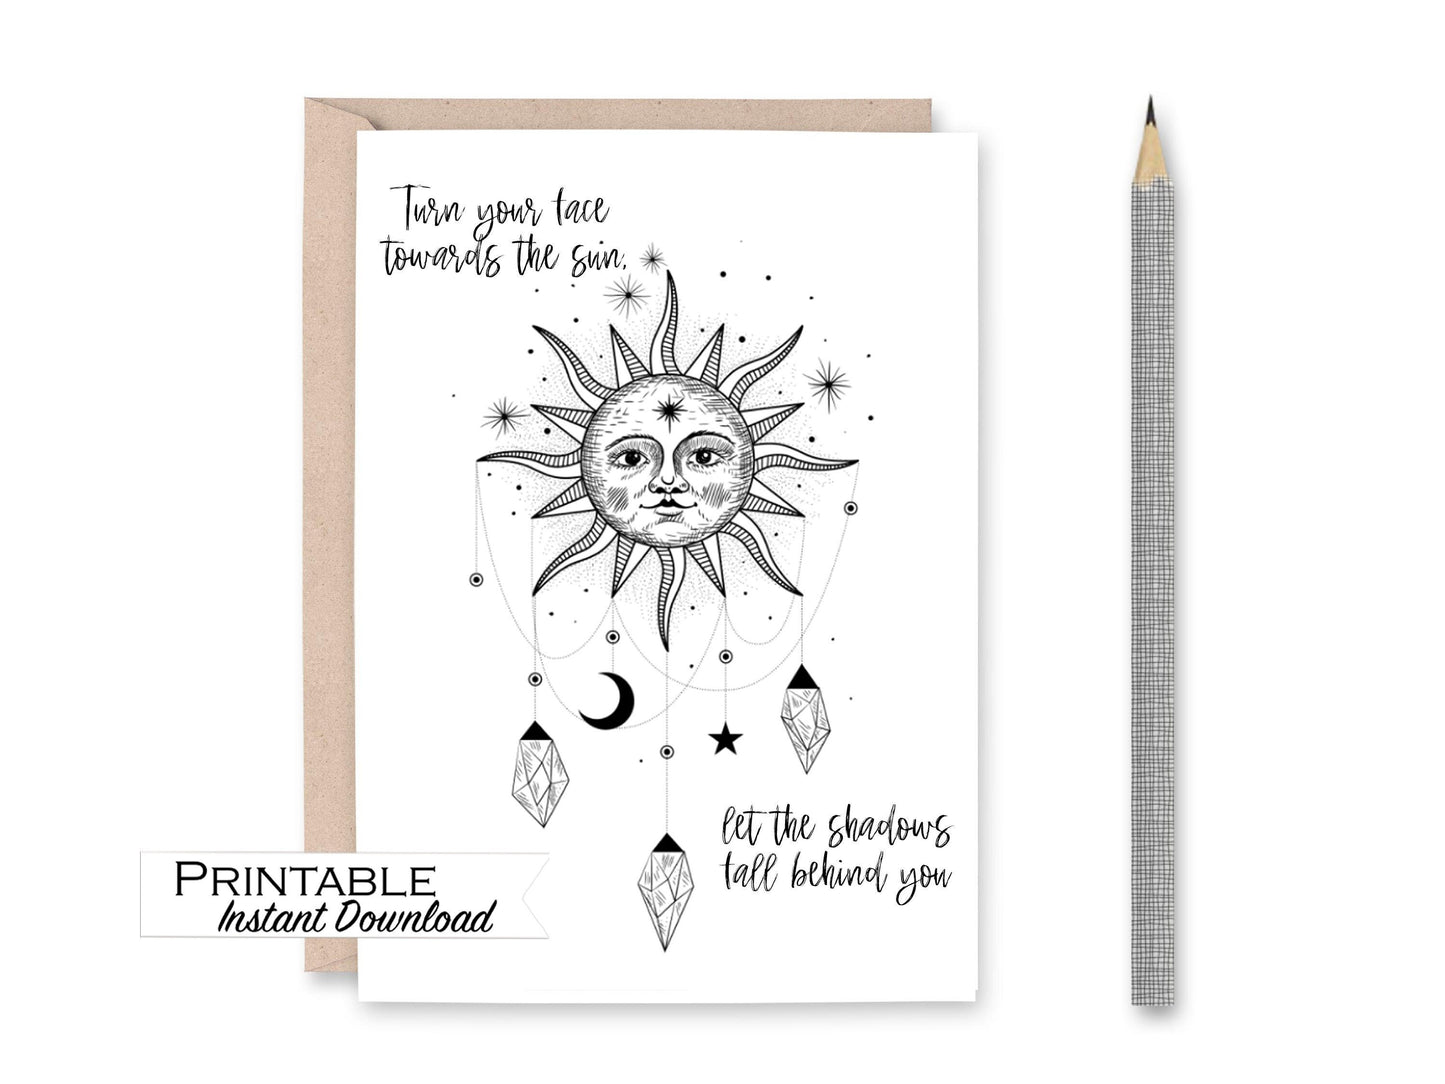 Celestial Encouragement Printable Card - Turn your Face Towards the Sun Let the Shadows Fall Behind you